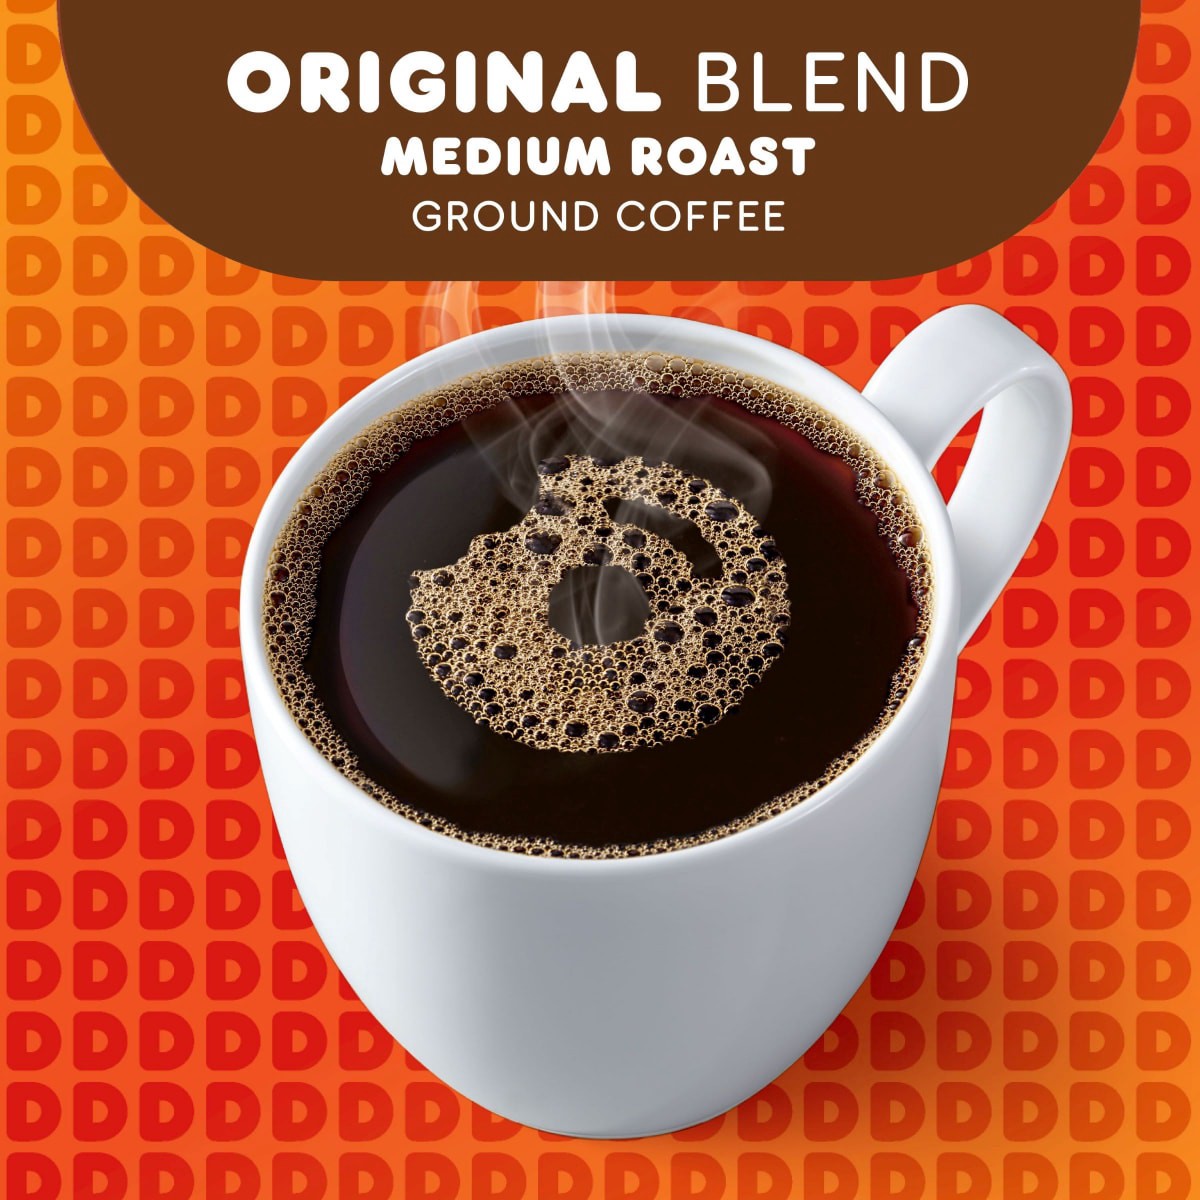 slide 20 of 29, Dunkin' Medium Roast Original Blend Ground Coffee 30 oz, 30 oz